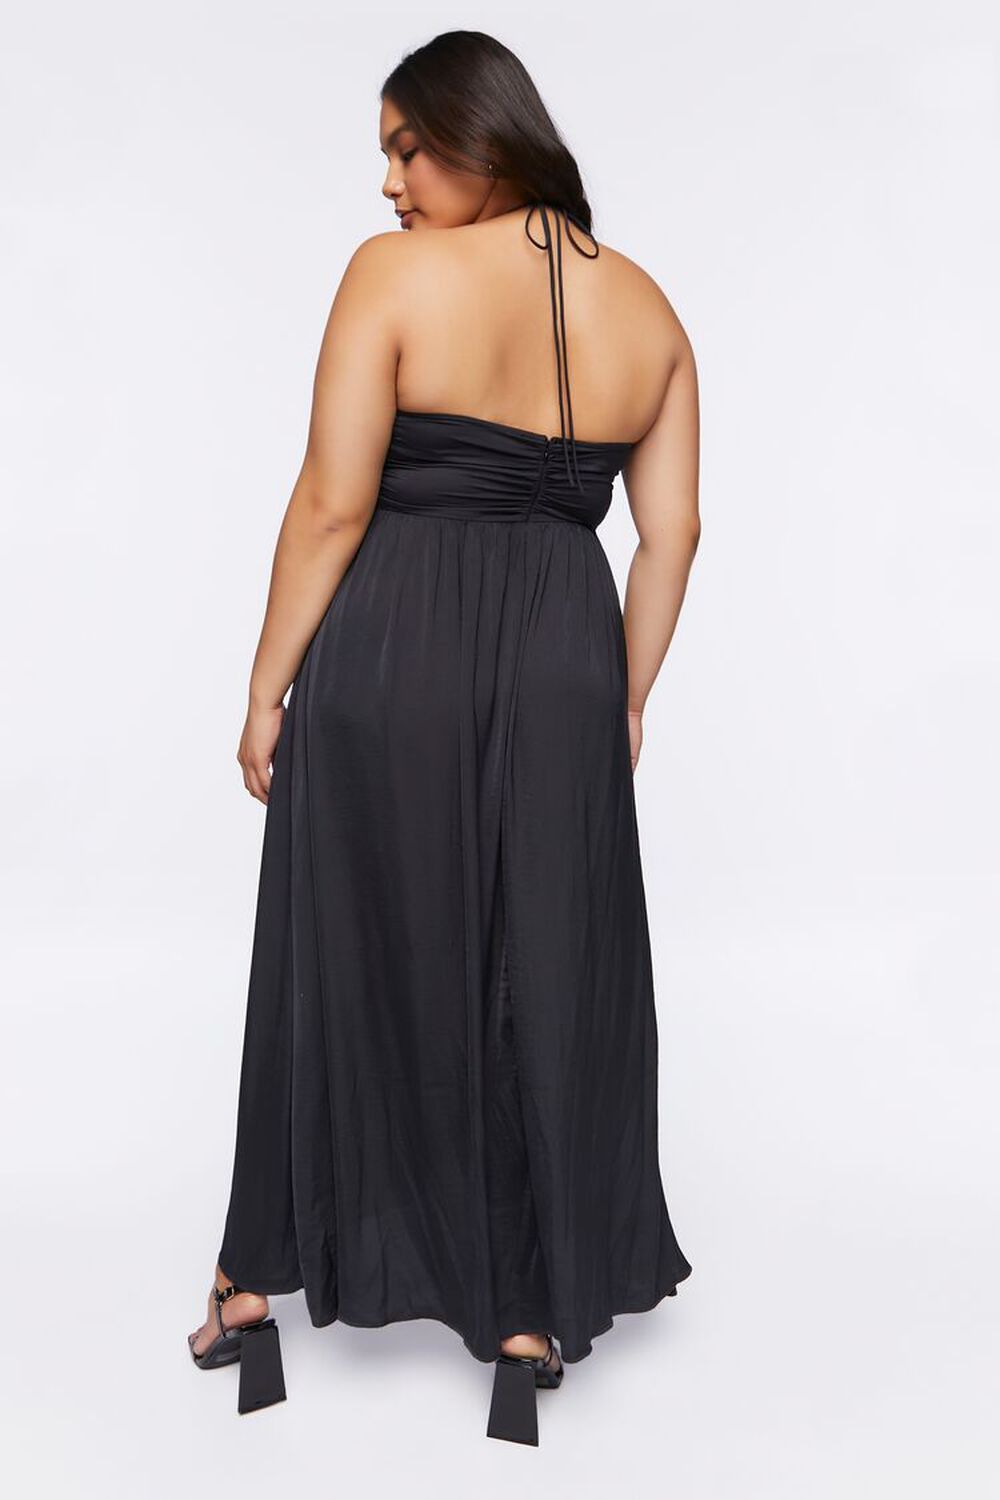 BLACK Plus Size Halter Maxi Dress, image 3